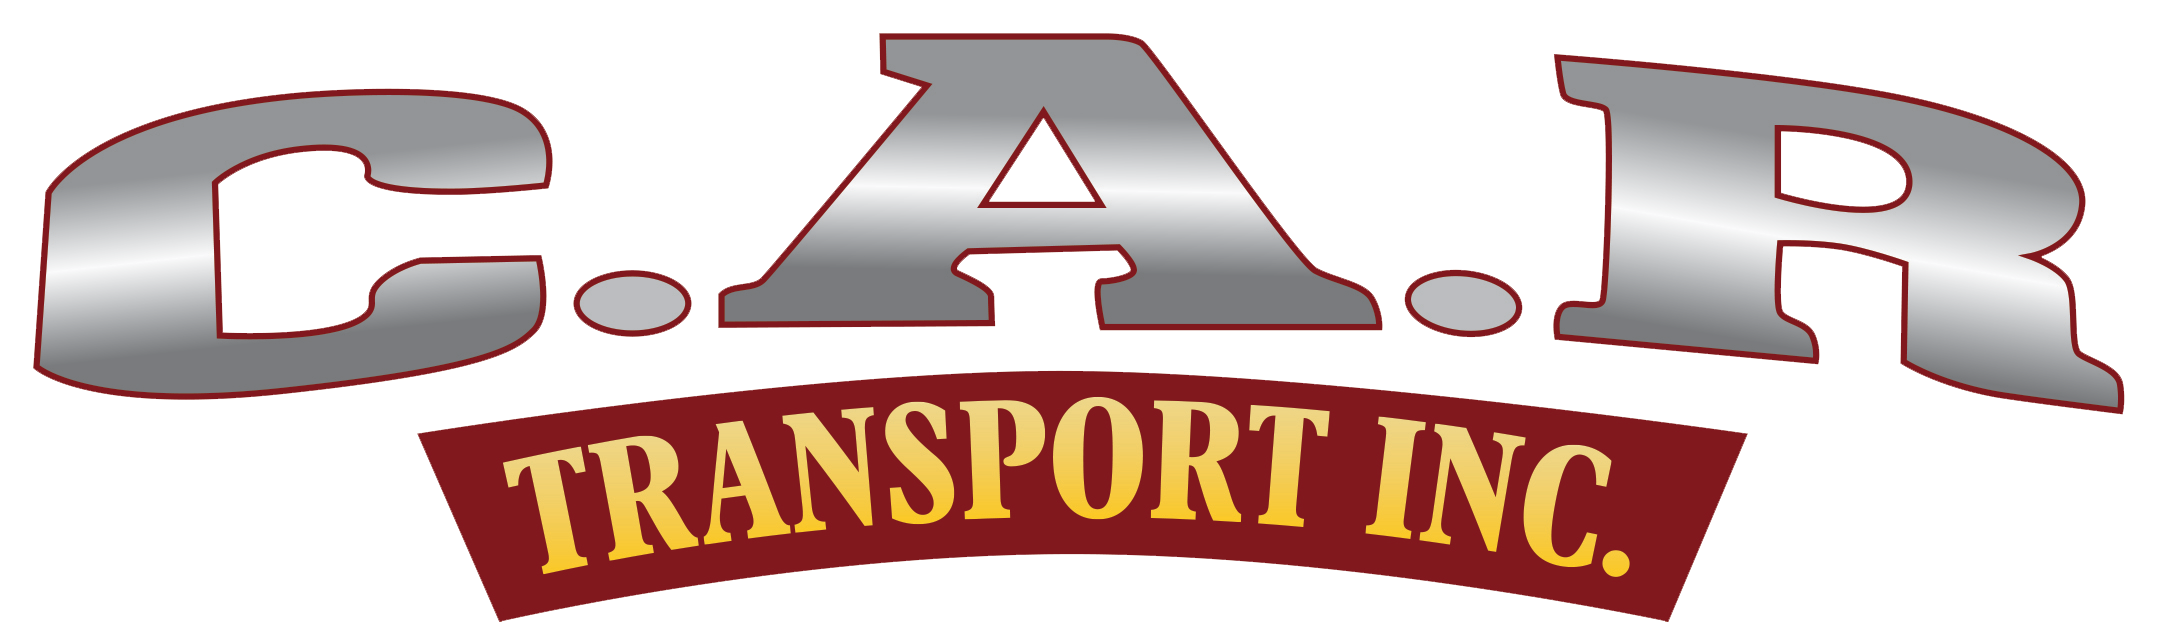 Car Transport Inc